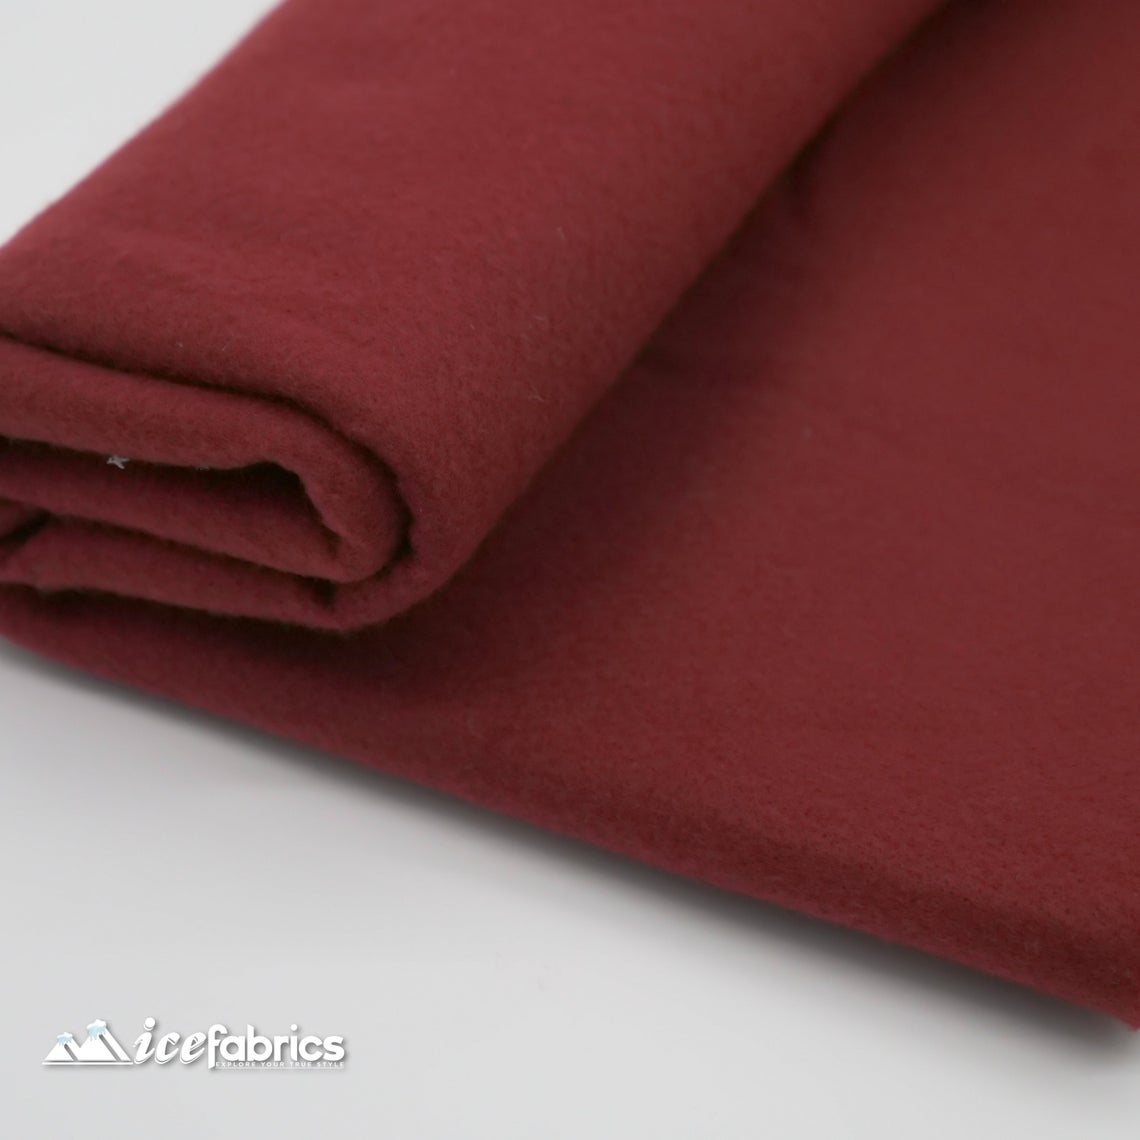 Acrylic Felt Fabric By The Roll | 20 yards | Wholesale Fabric ICE FABRICS Burgundy